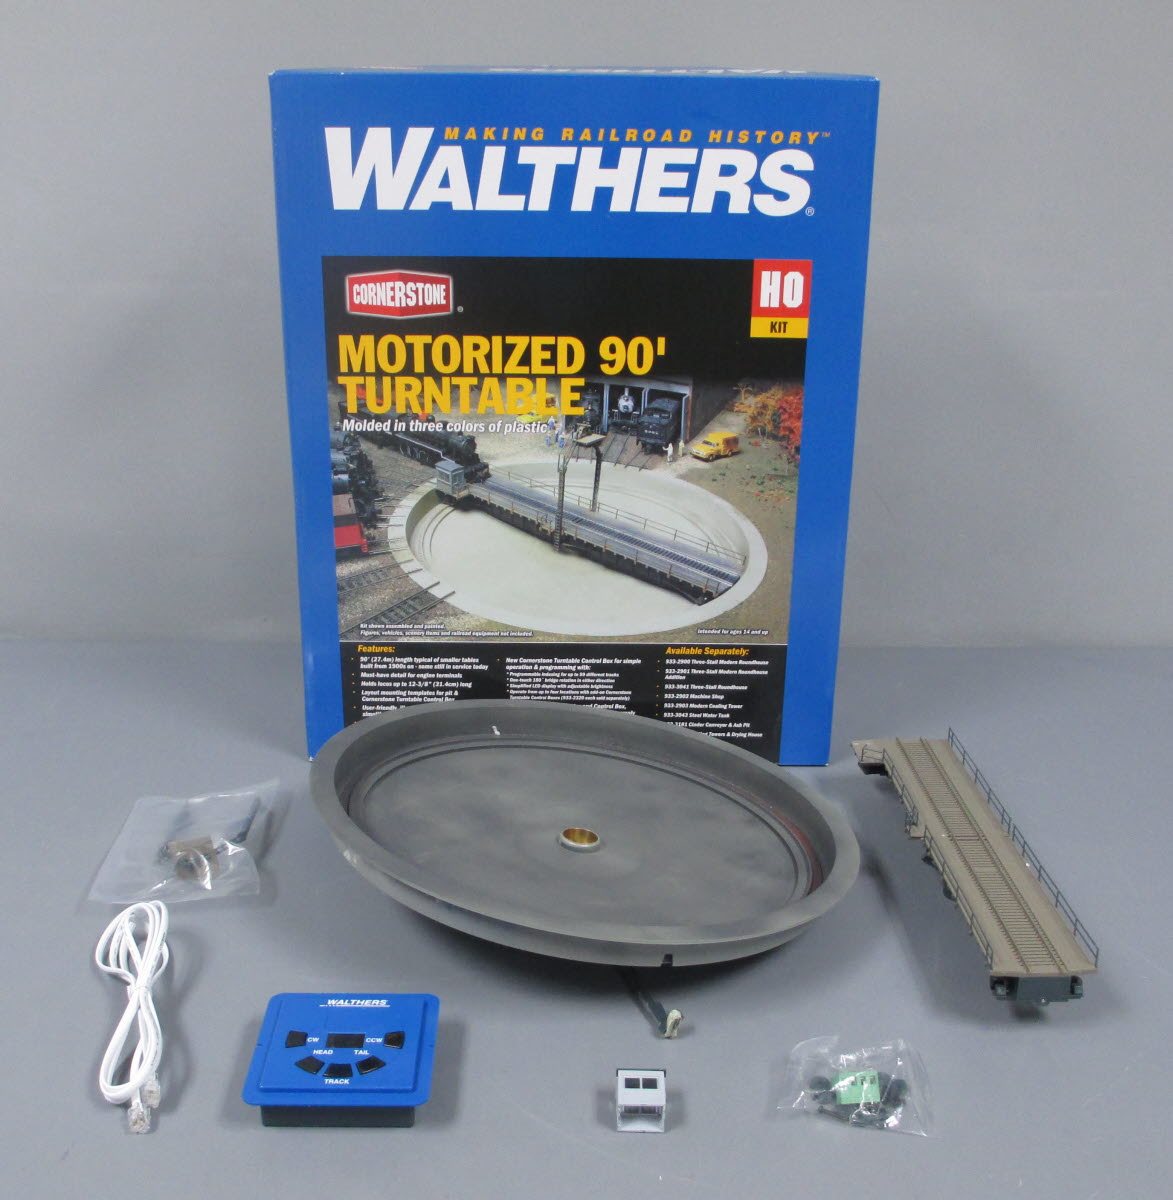 HO Scale Walthers Cornerstone 933-2860 Motorized 90' Turntable Kit